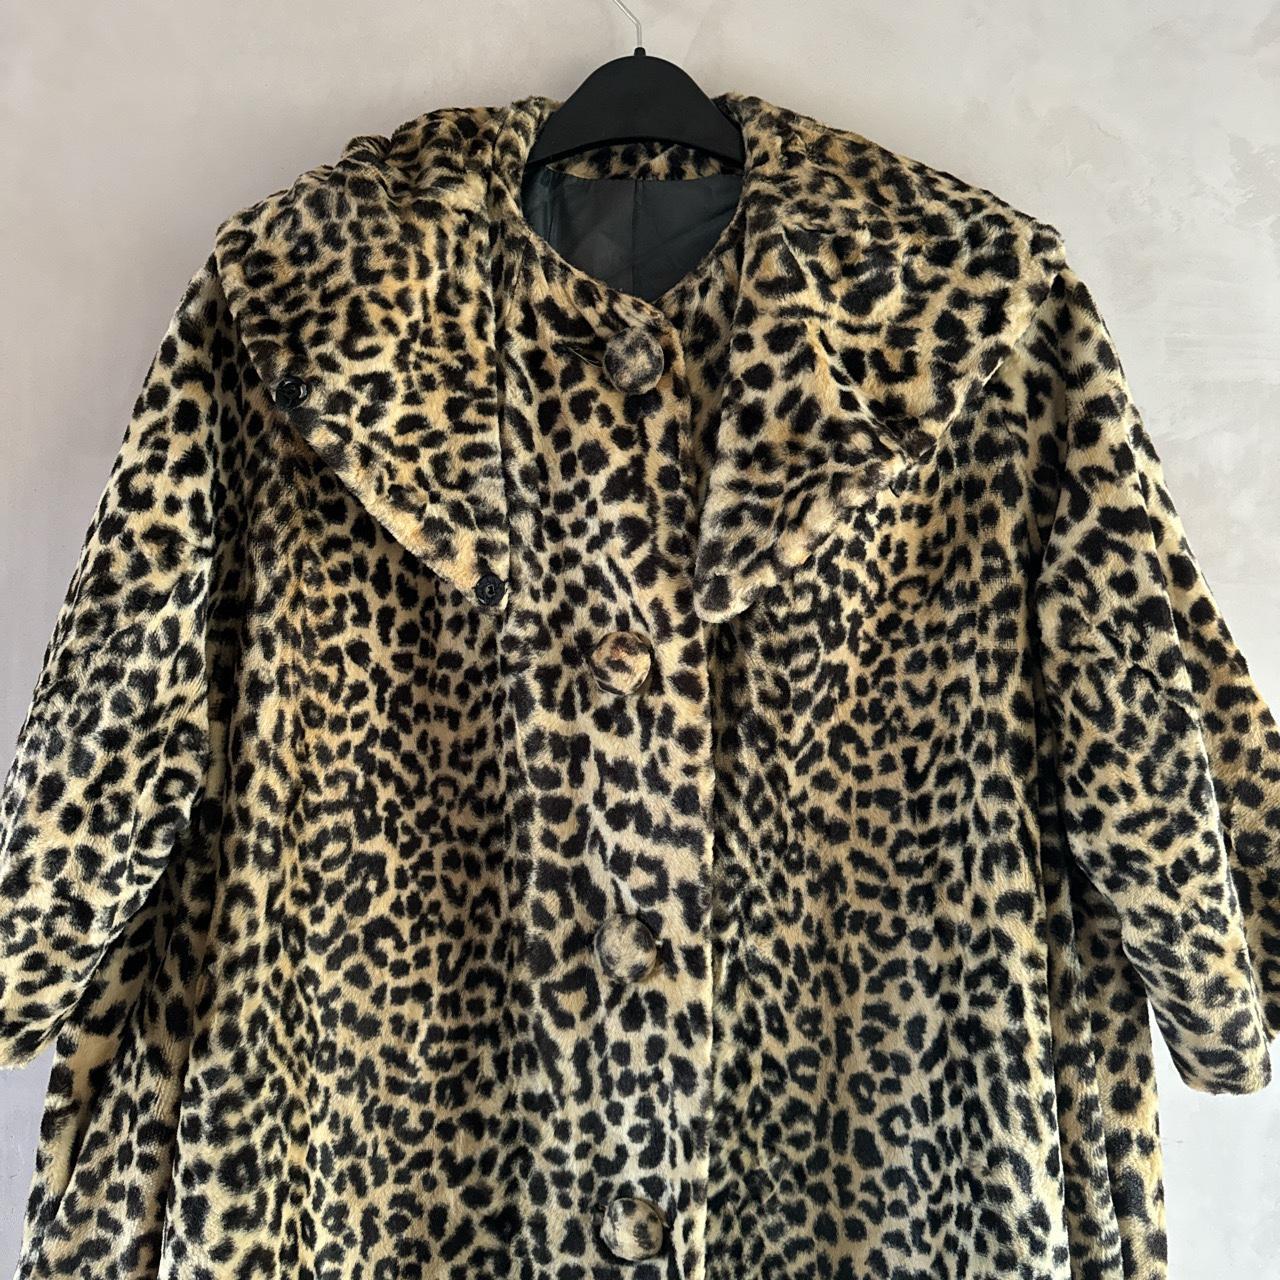 Vintage leopard print plus size swing jacket - not a... - Depop